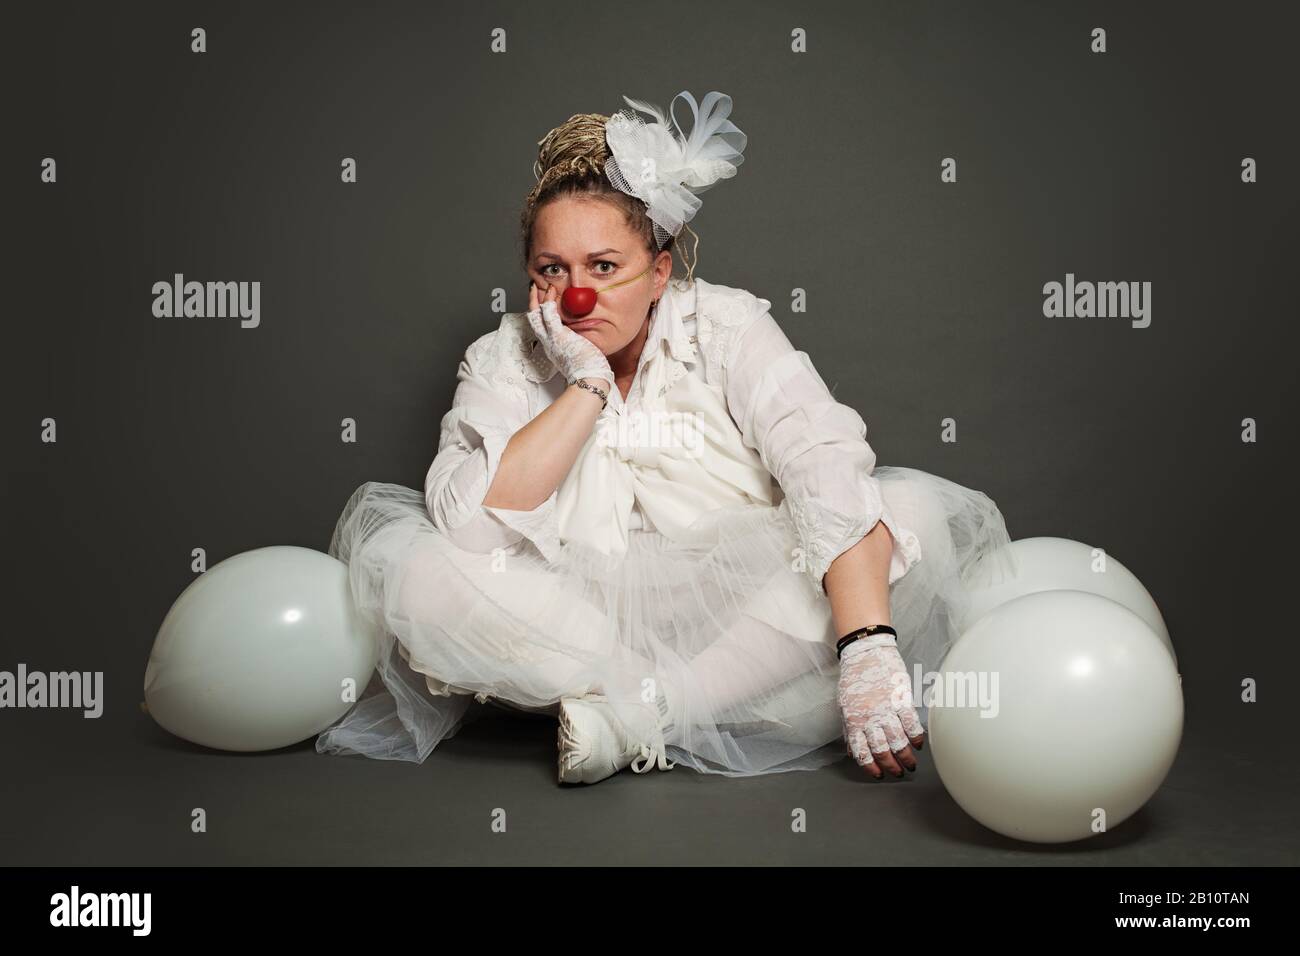 Performance Actress Woman Clown thinking Stock Photo